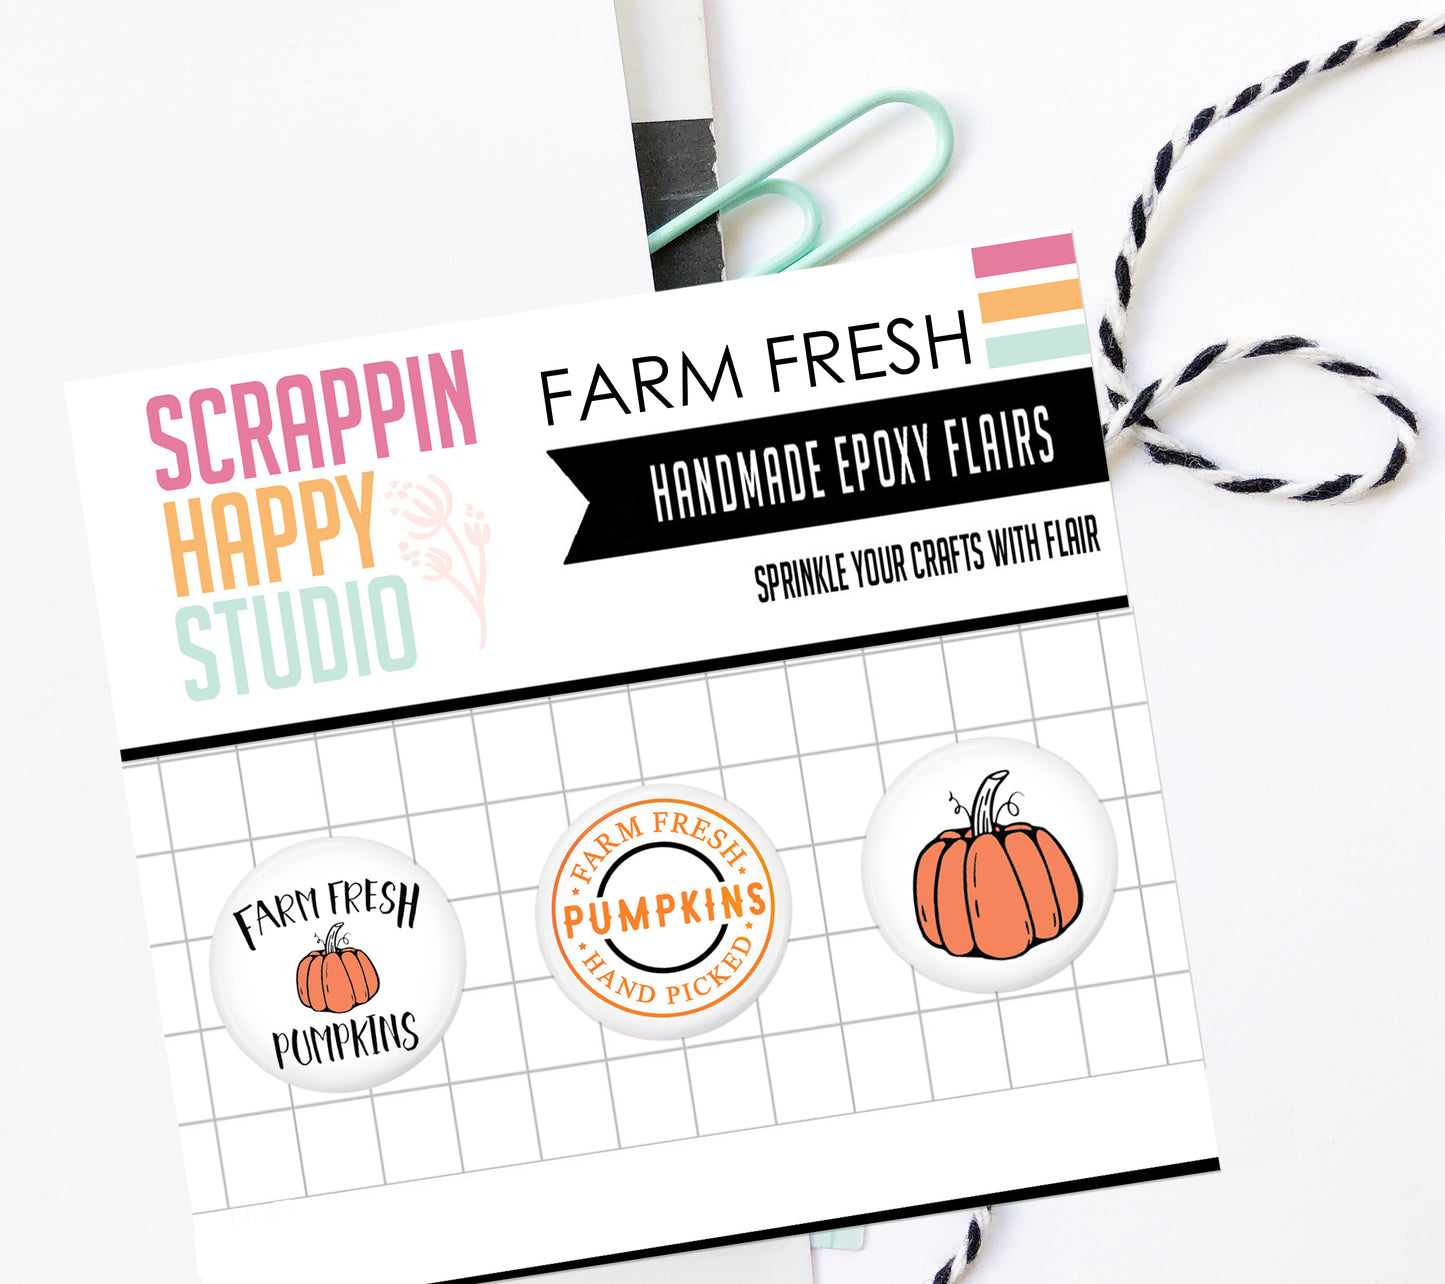 Farm Fresh Pumpkins Epoxy Flair